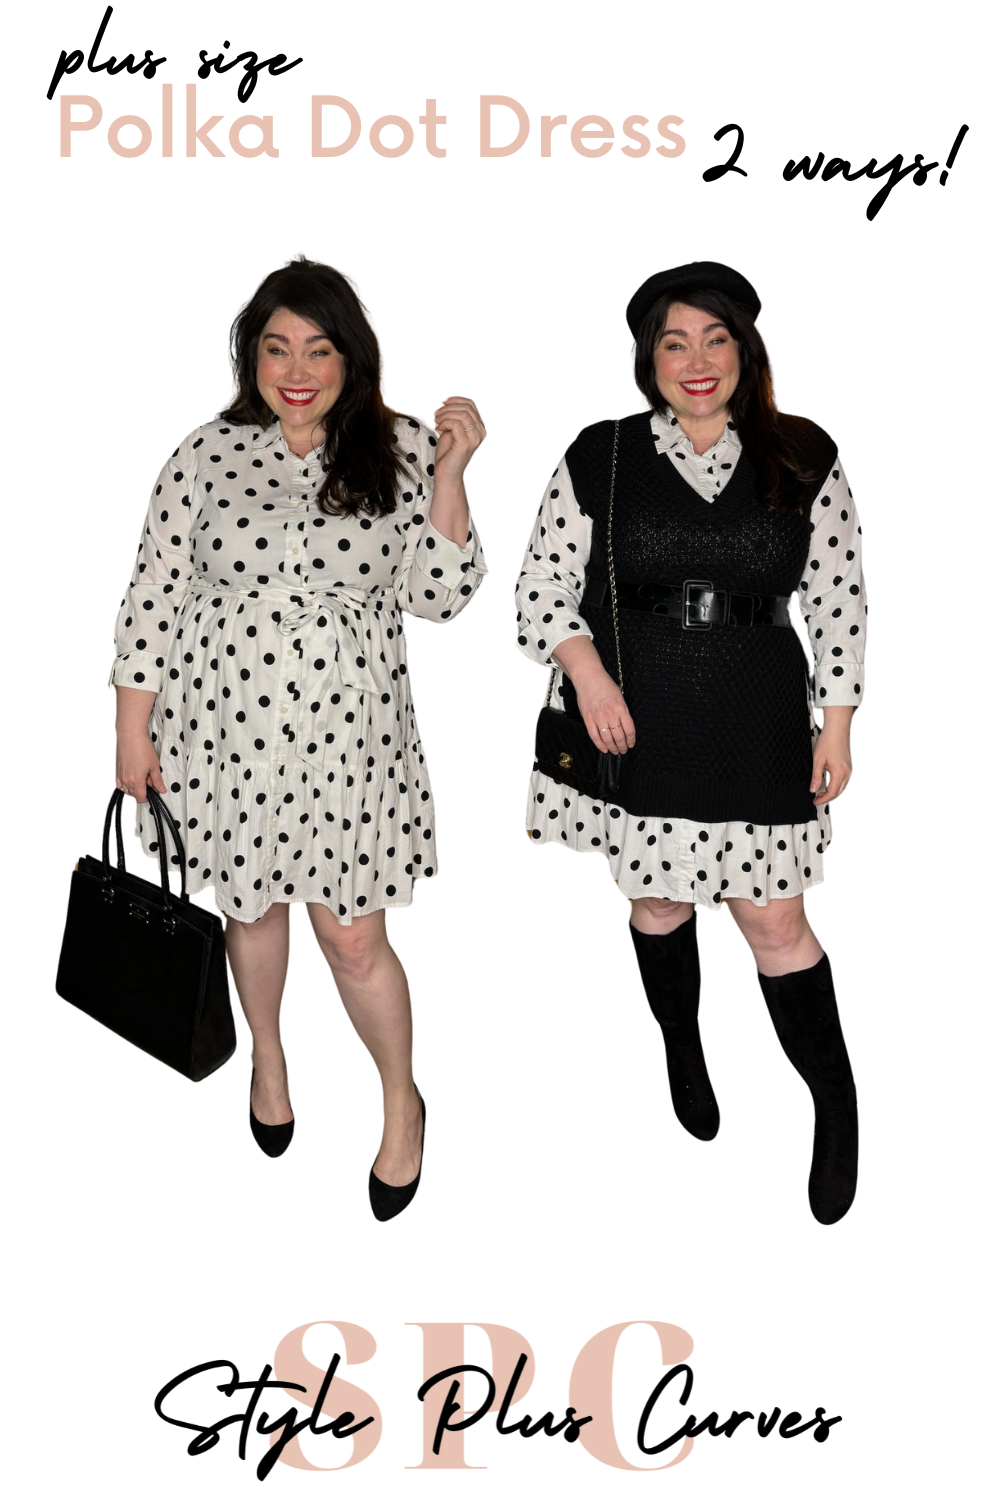 Plus Size Polka Dot Dress – 2 Ways!